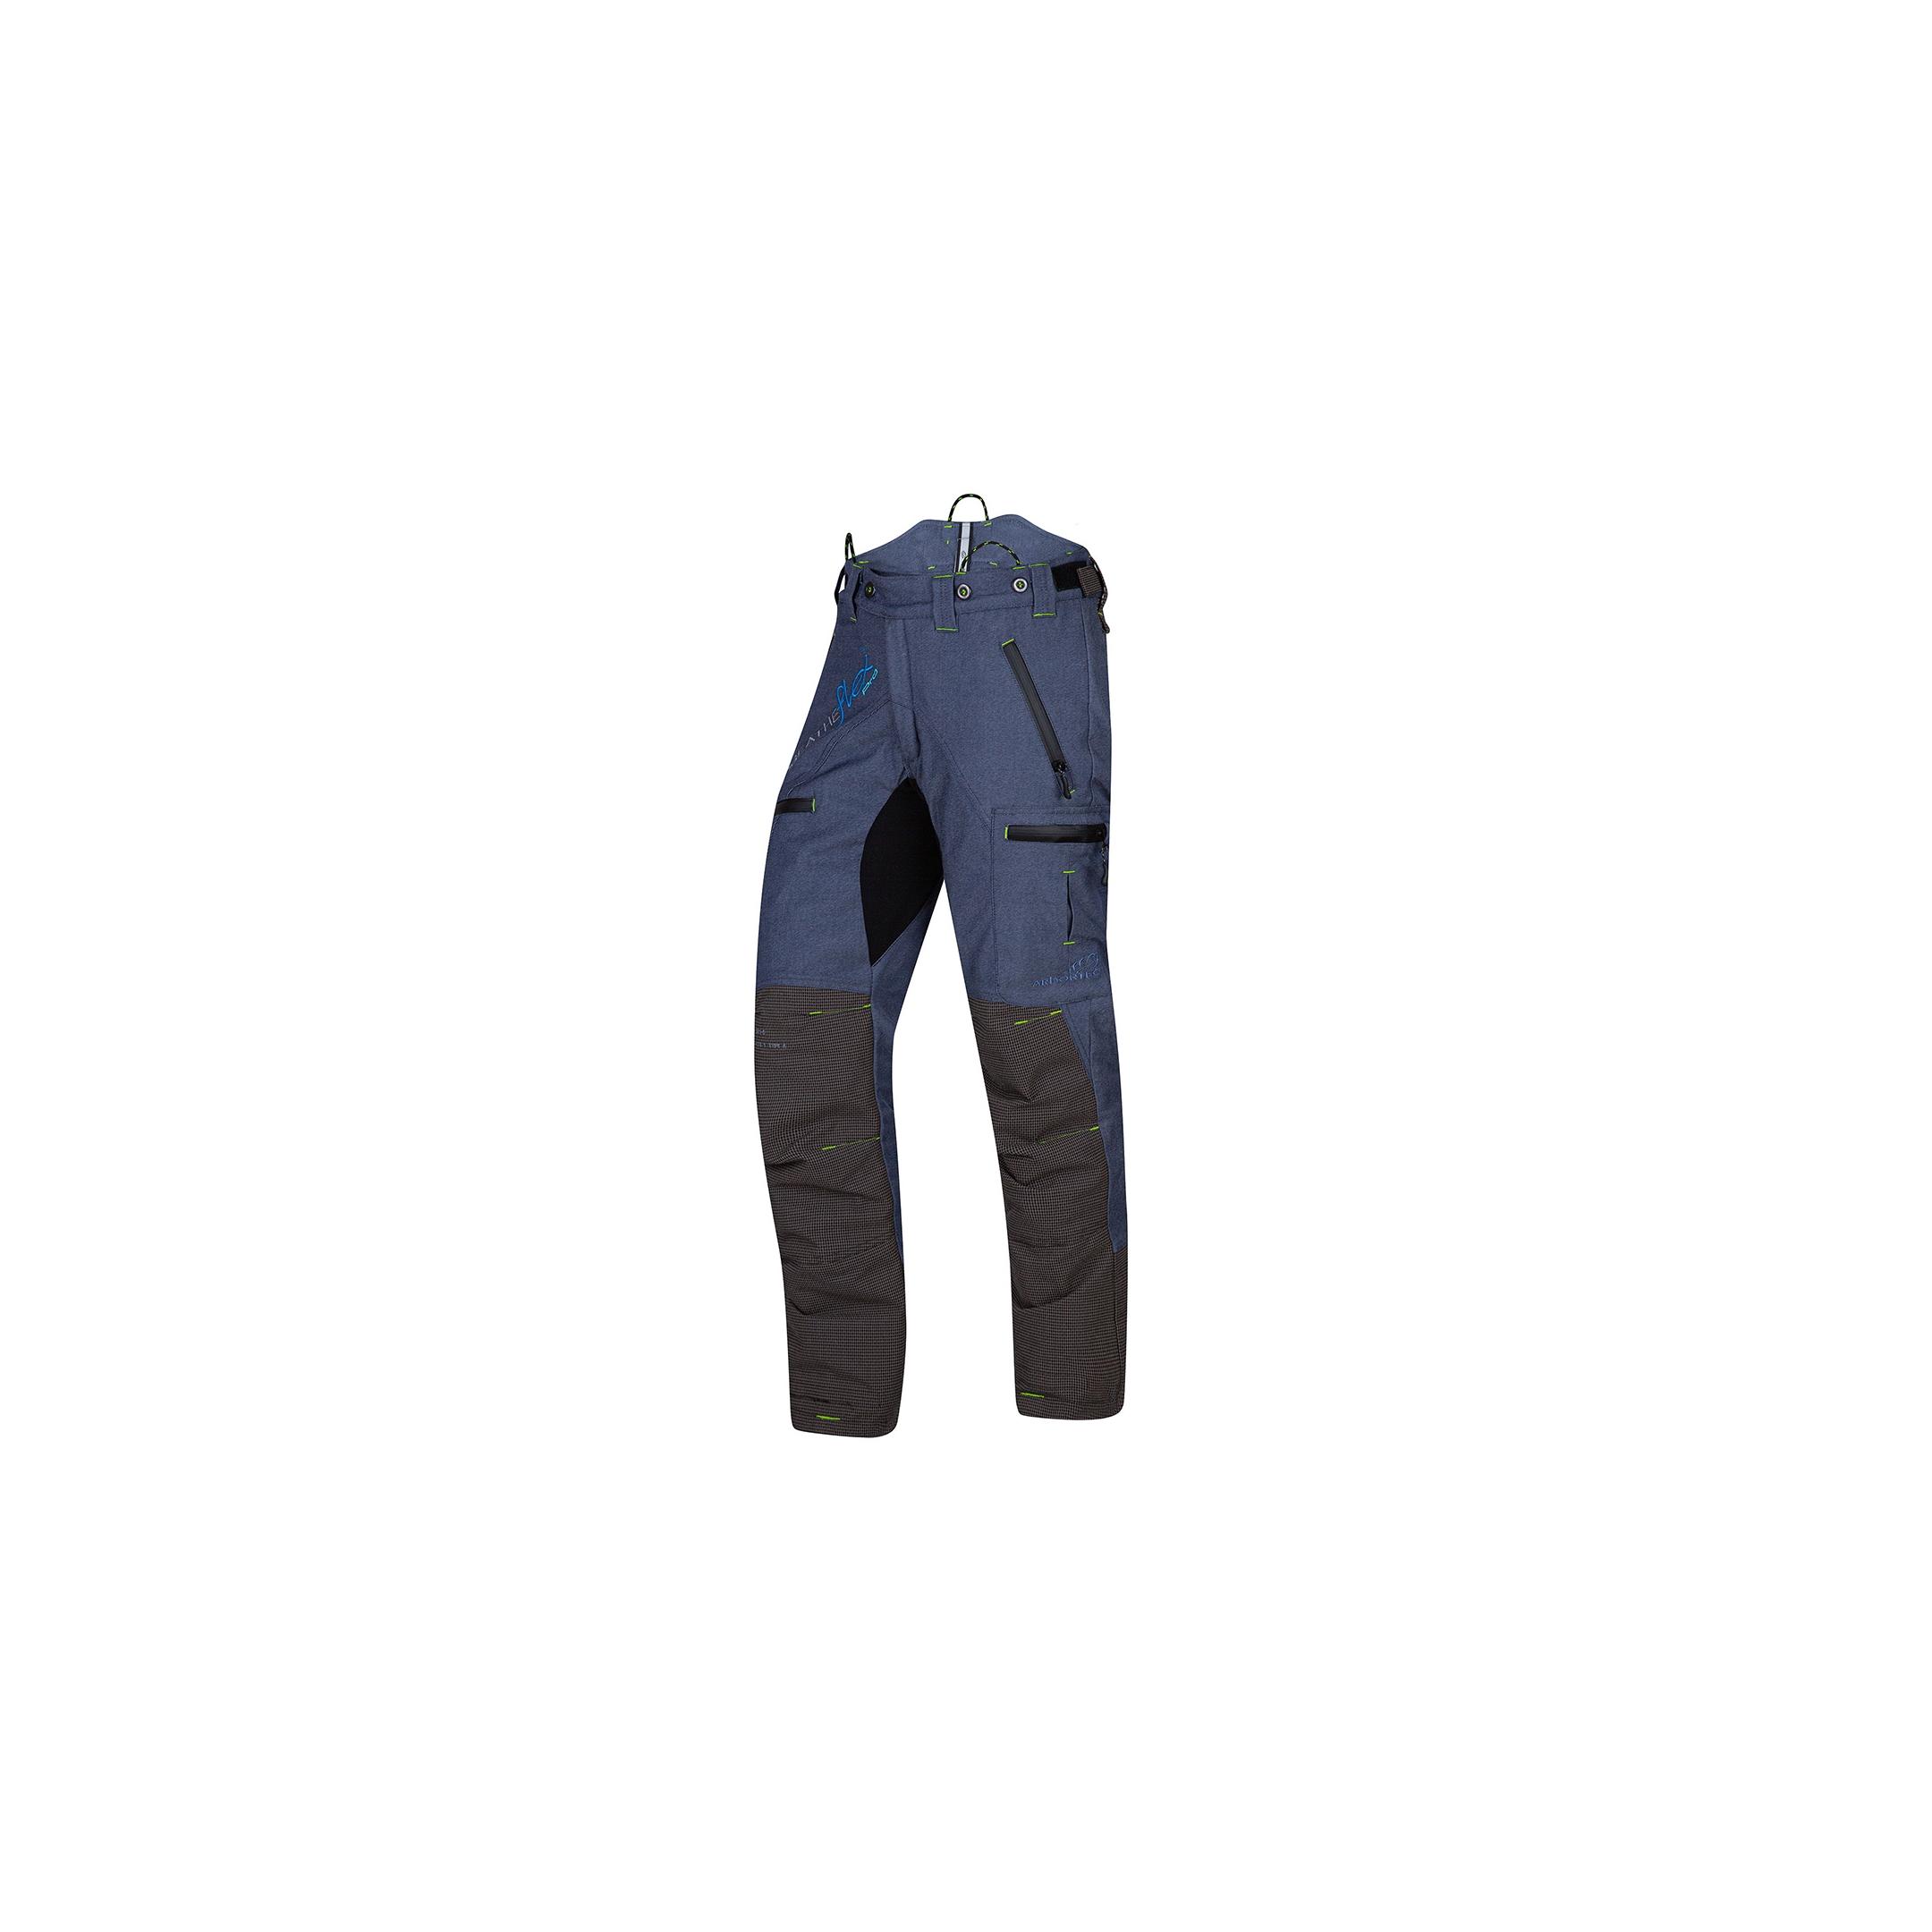 Pantaloni antitaglio BreatheFlex Pro Legacy classe 1 Tipo A Arbortec  - Arbortec - Pantaloni Antitaglio